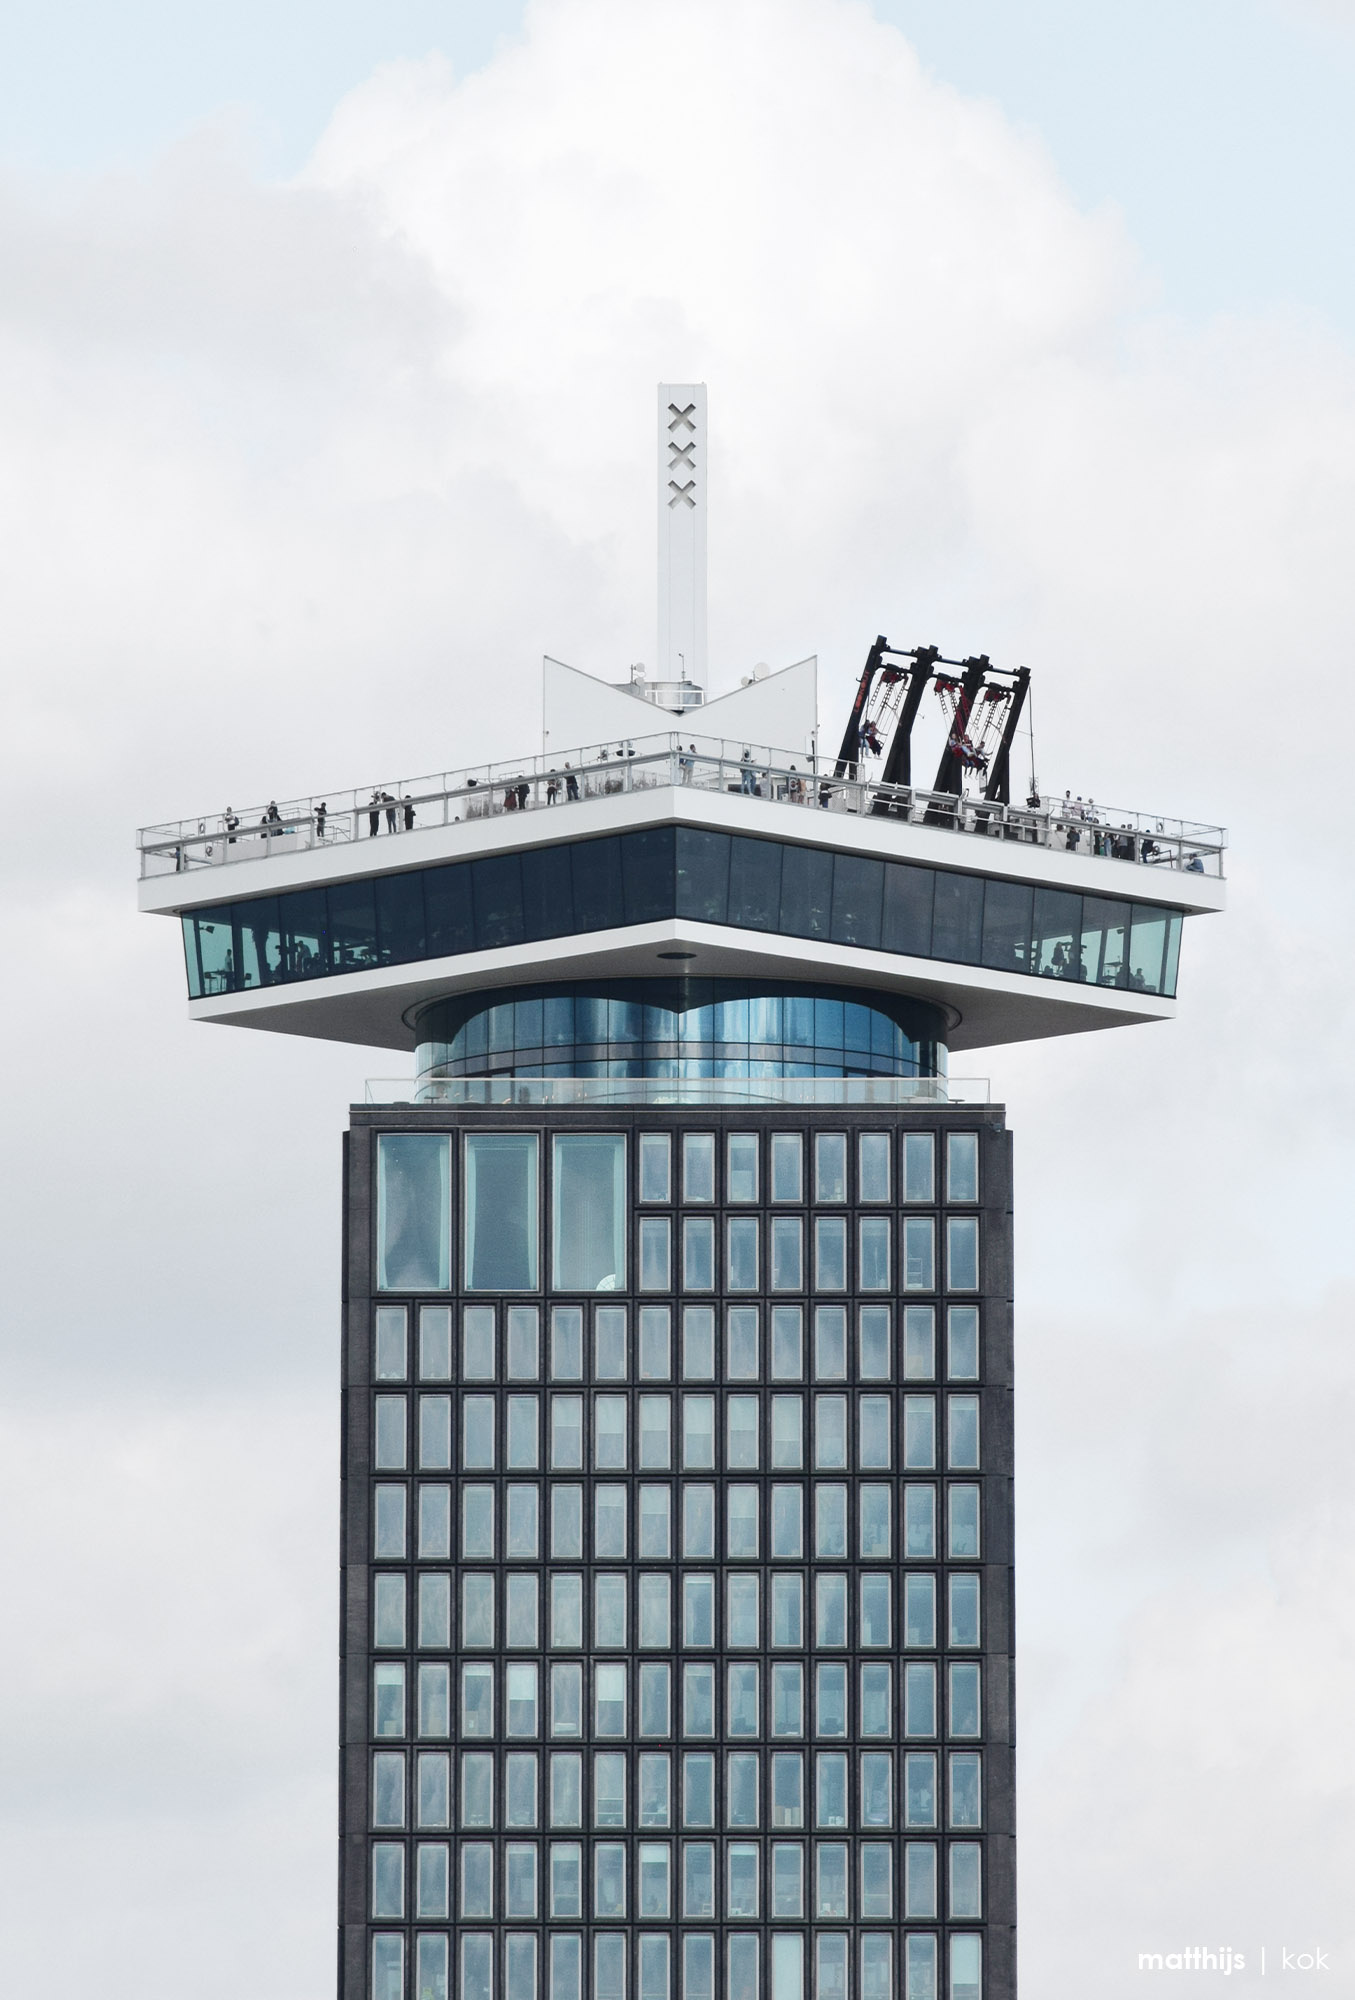 A'DAM Tower, Amsterdam, The Netherlands | Photo by Matthijs Kok